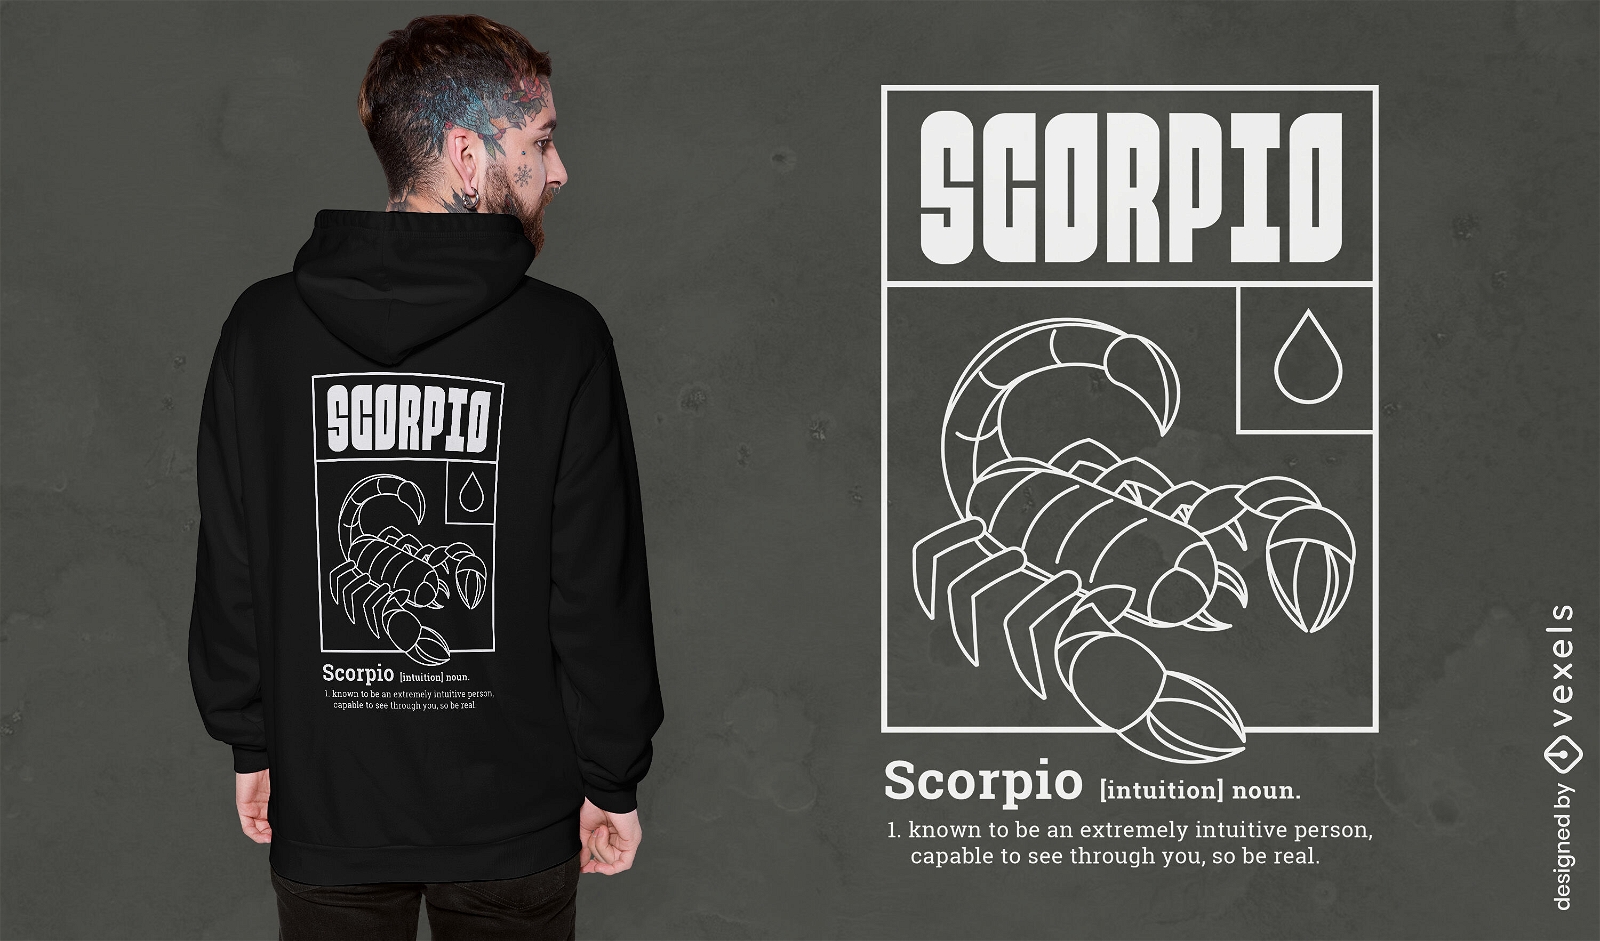 Scorpio description t-shirt design